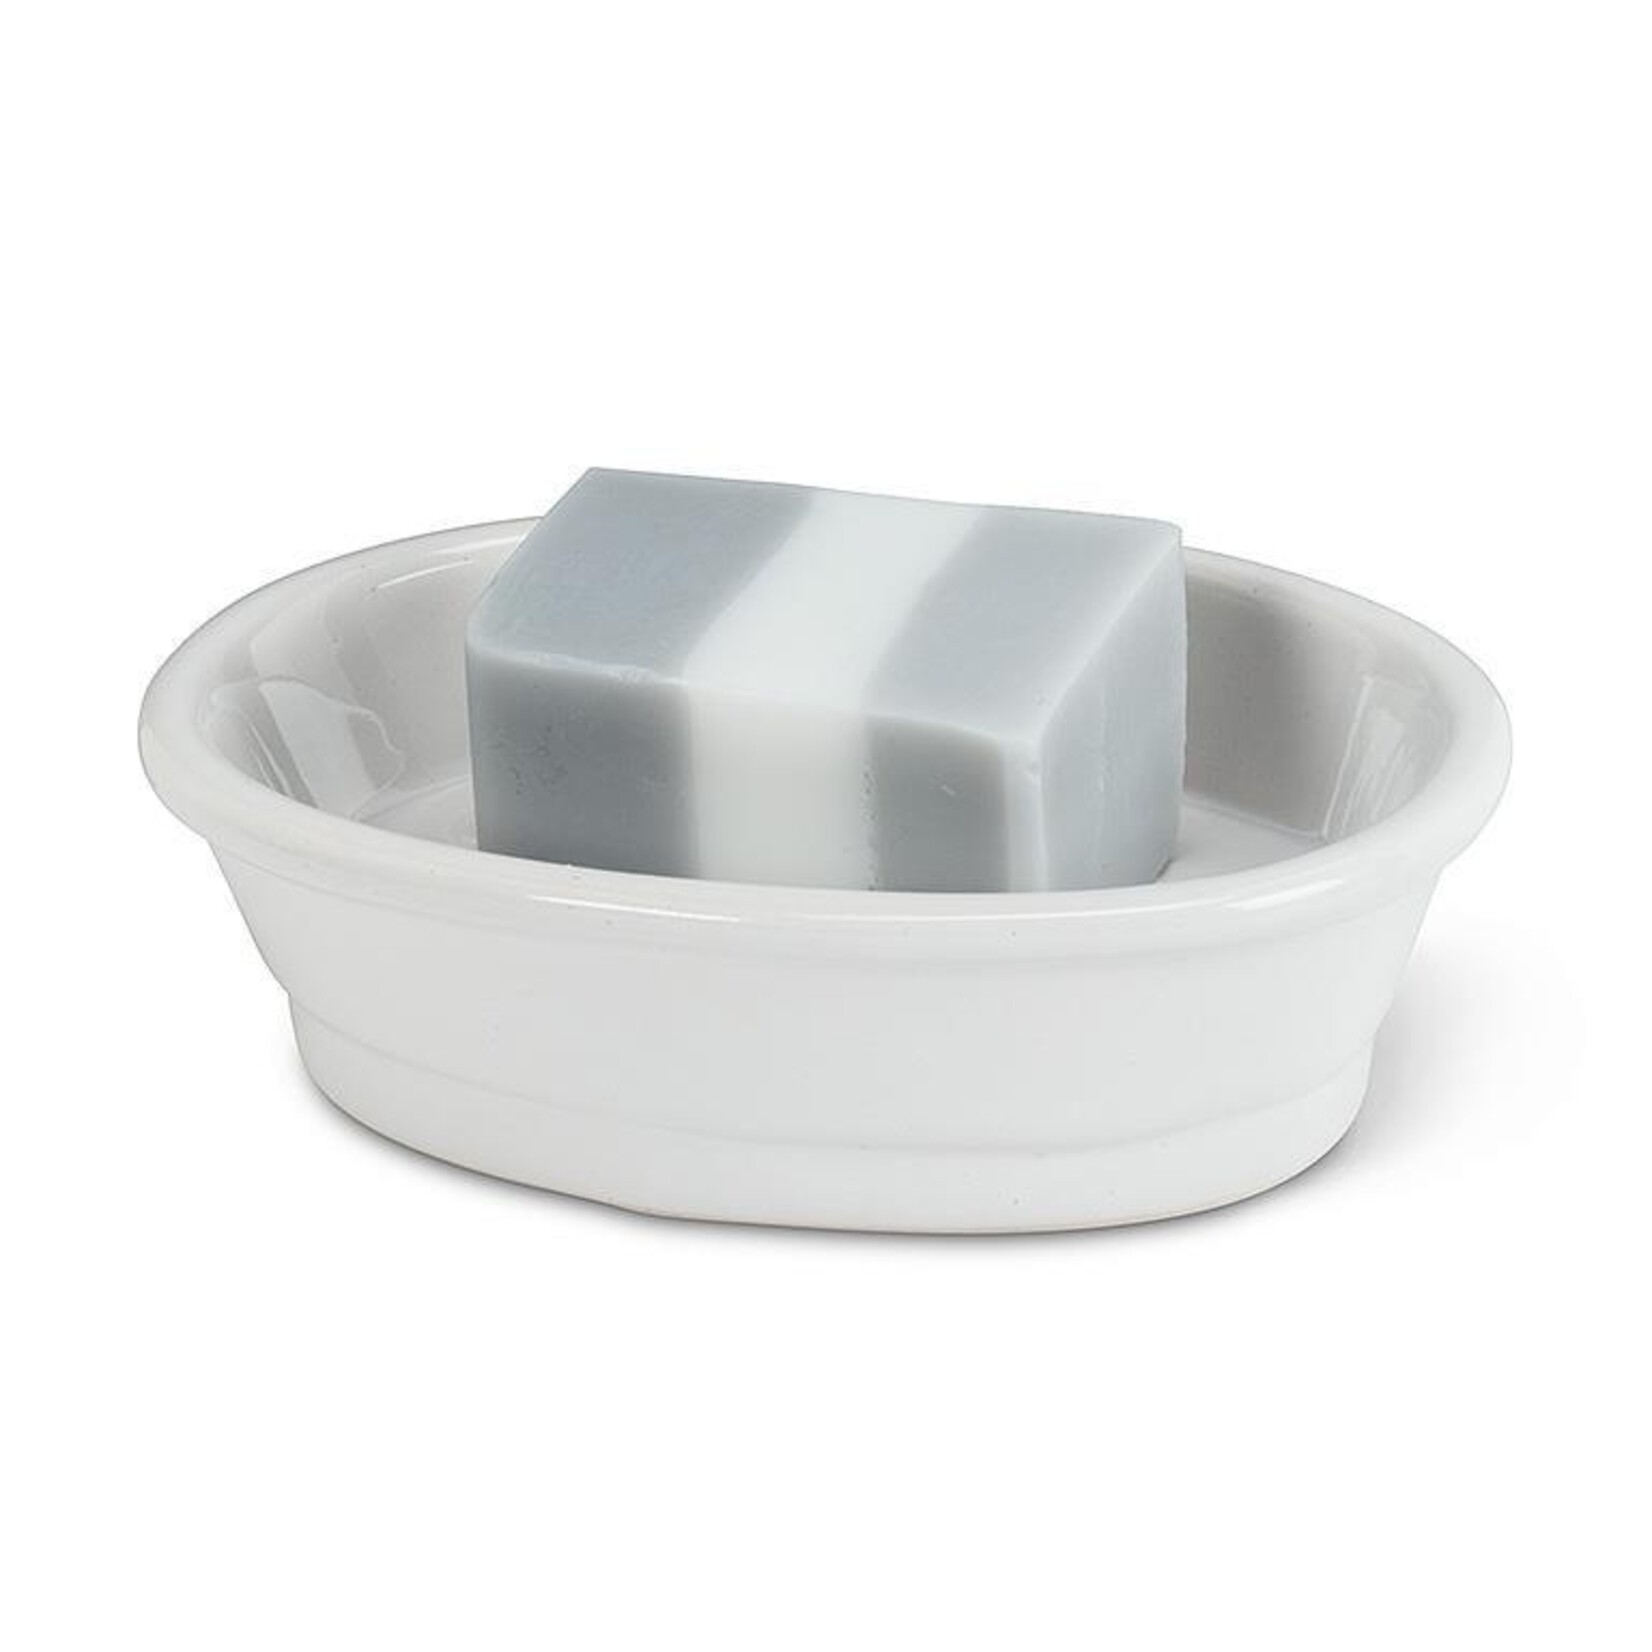 White Oval 'Savon' Soap Dish